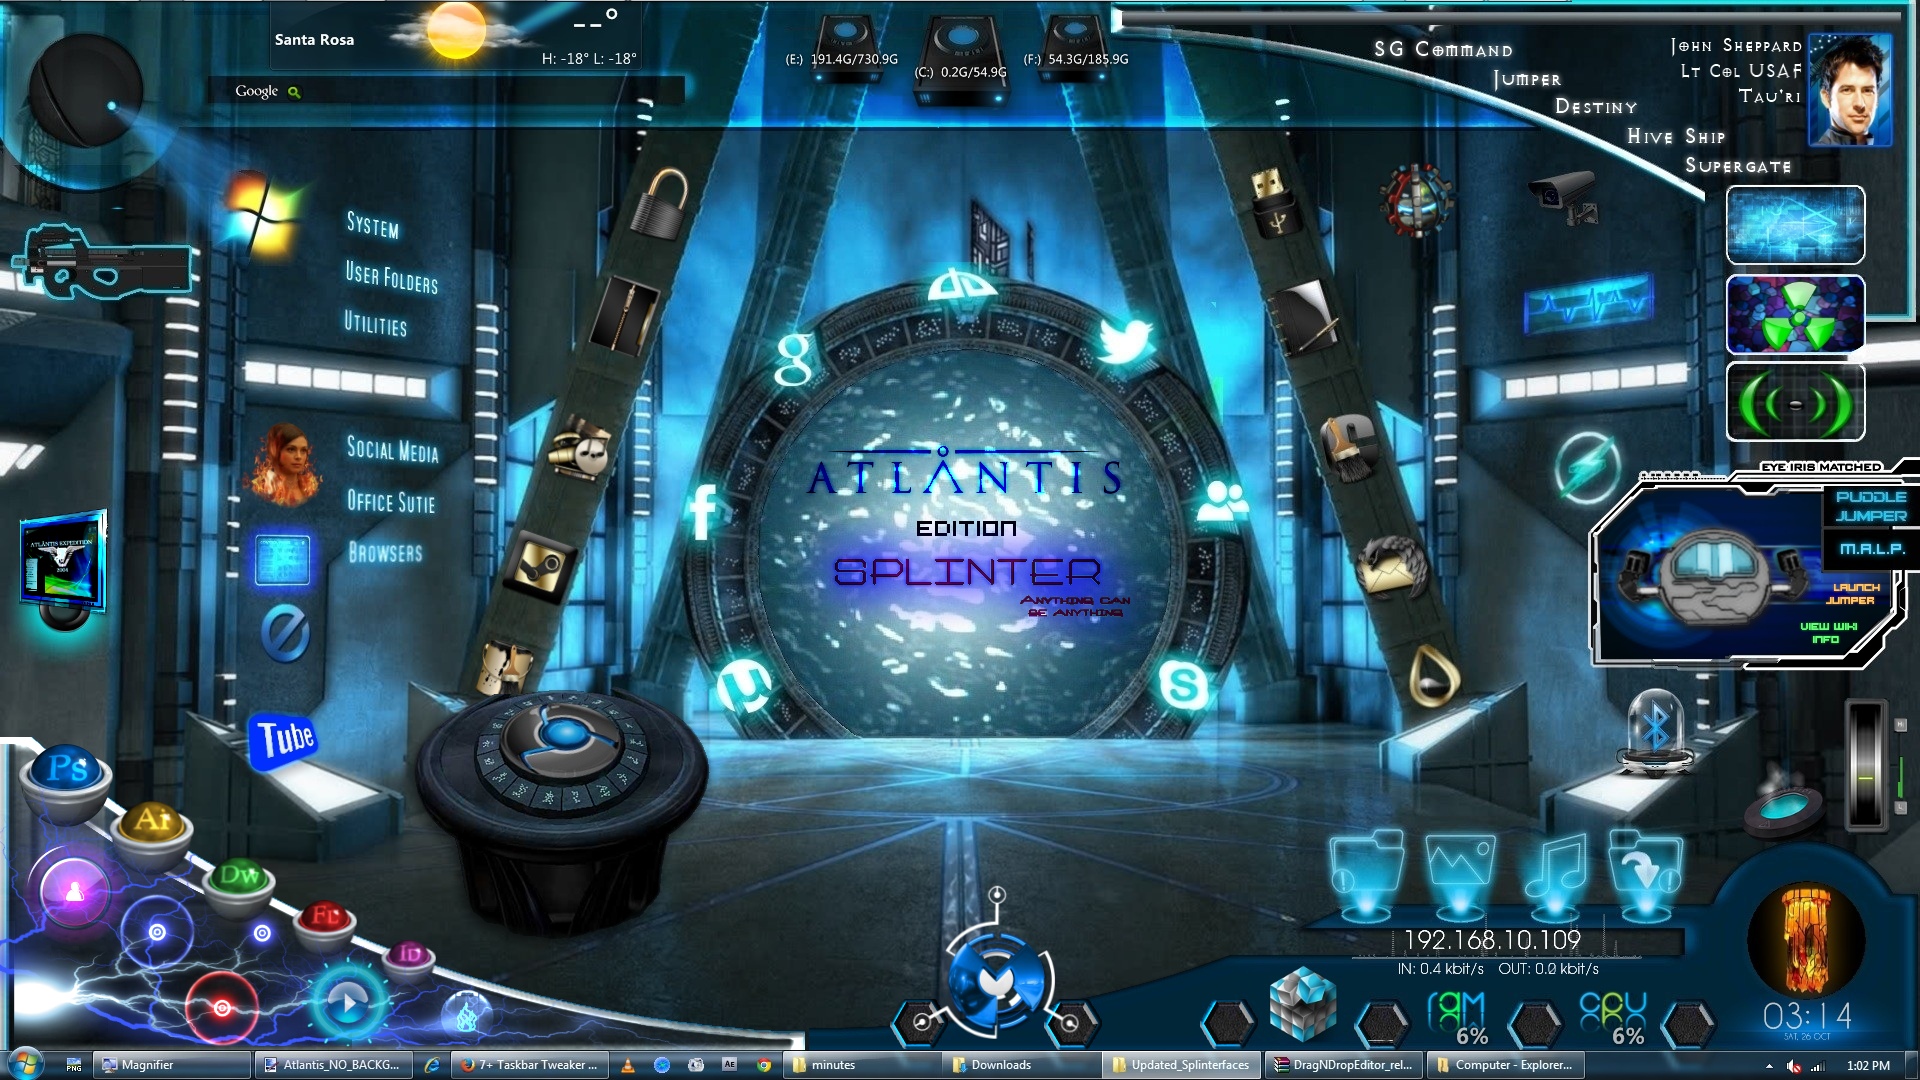 Atlantis Edition Splinter Stargate Screensaver Windows